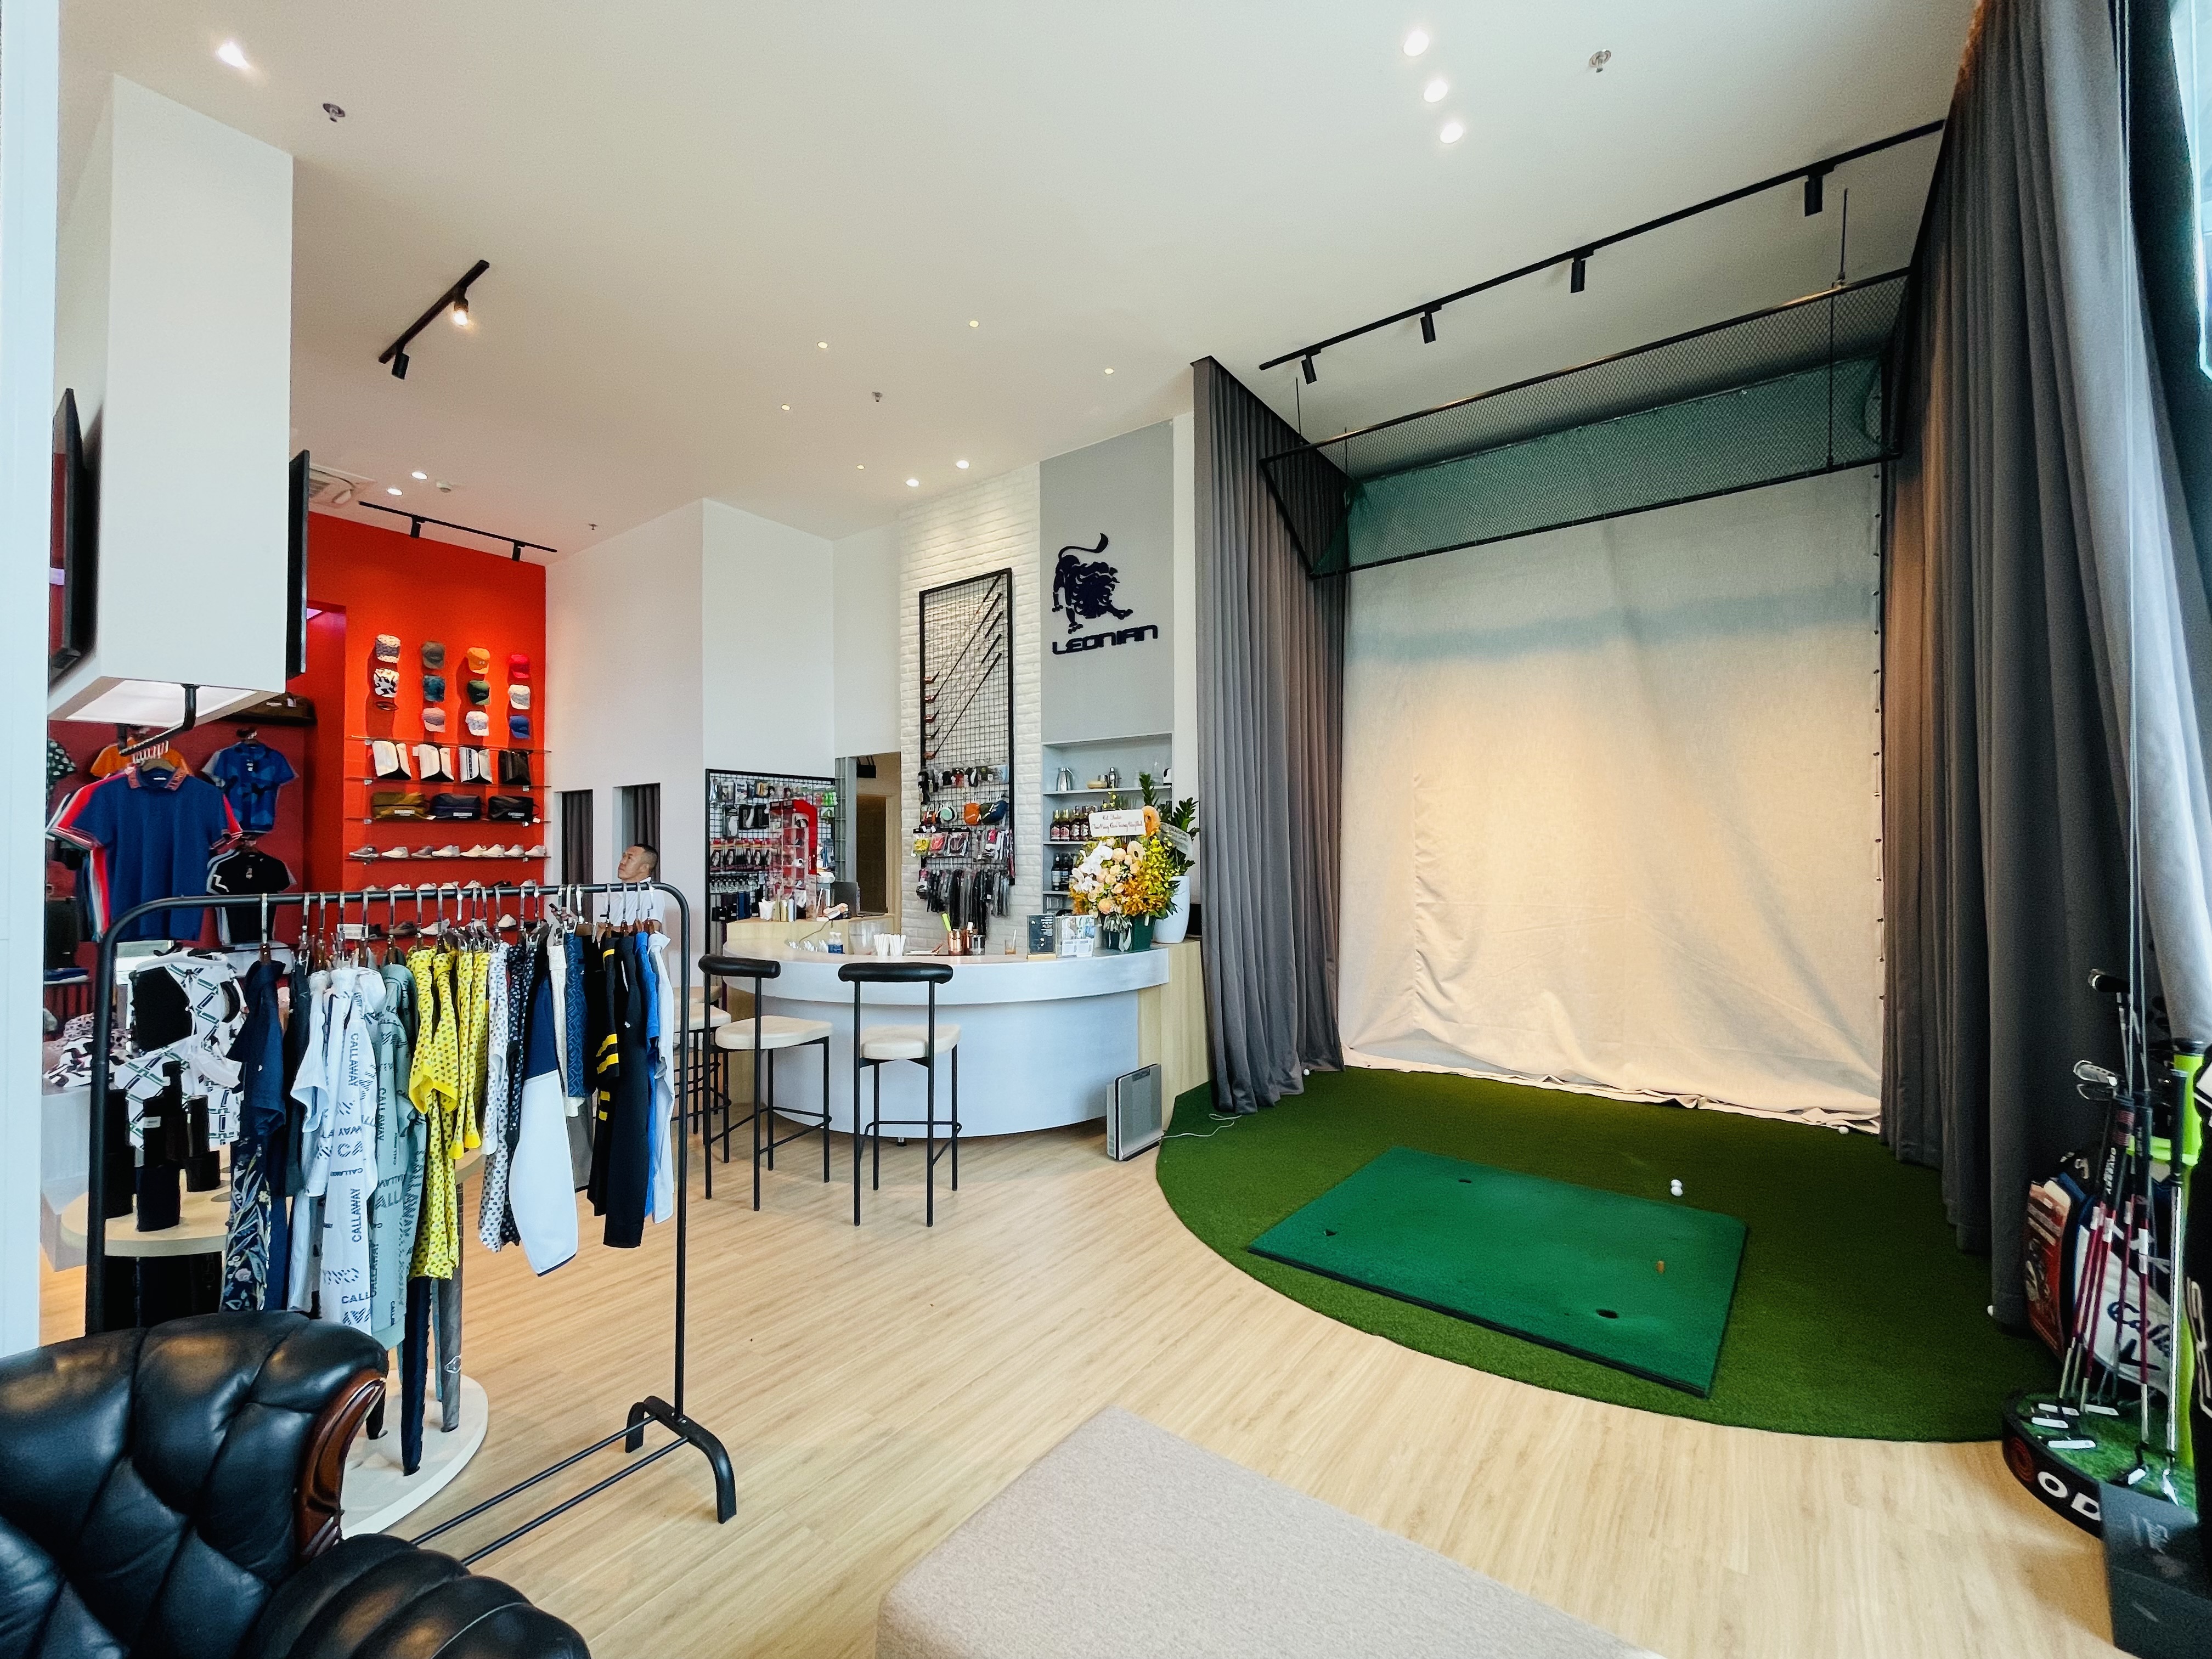 Leonian golf shop-1